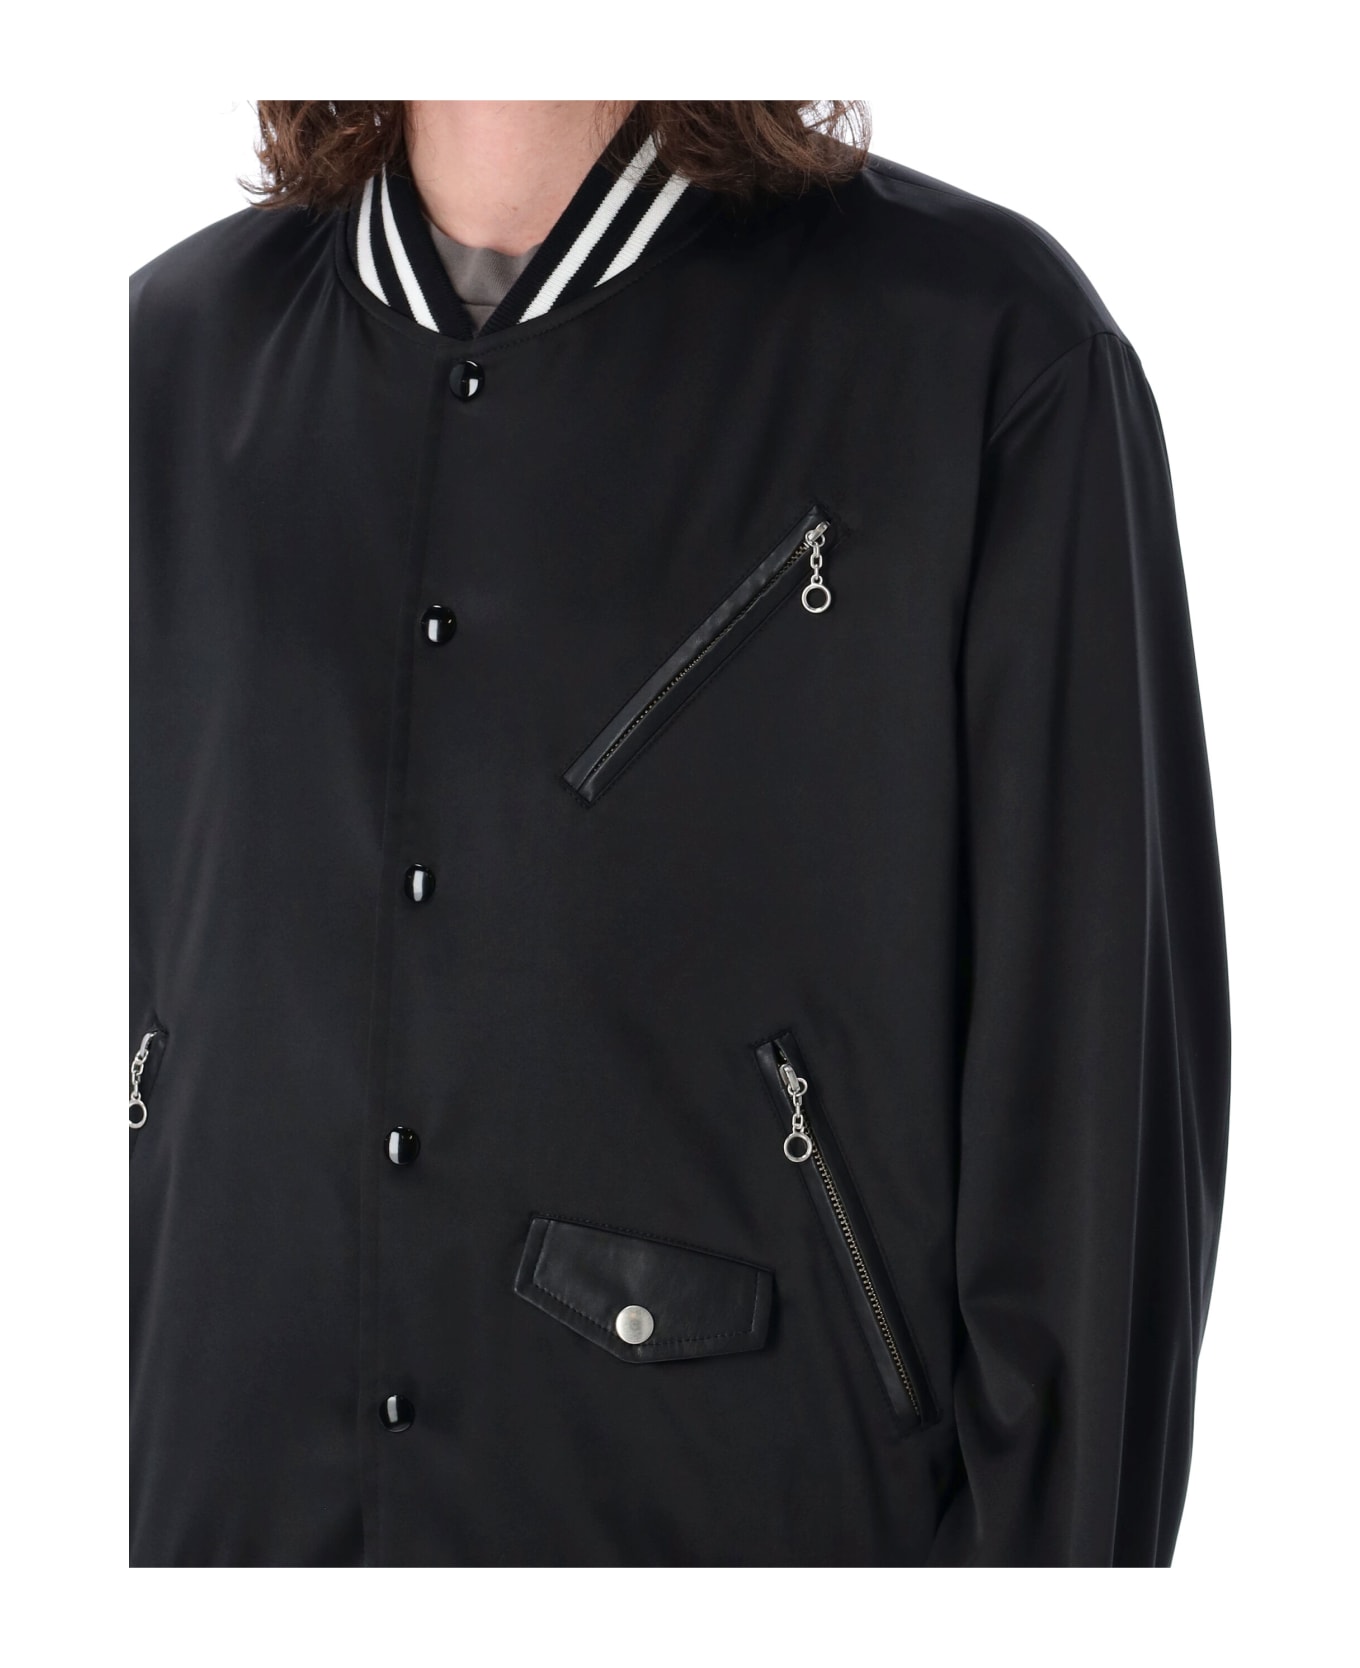 Undercover Jun Takahashi Varsity Jacket - BLACK